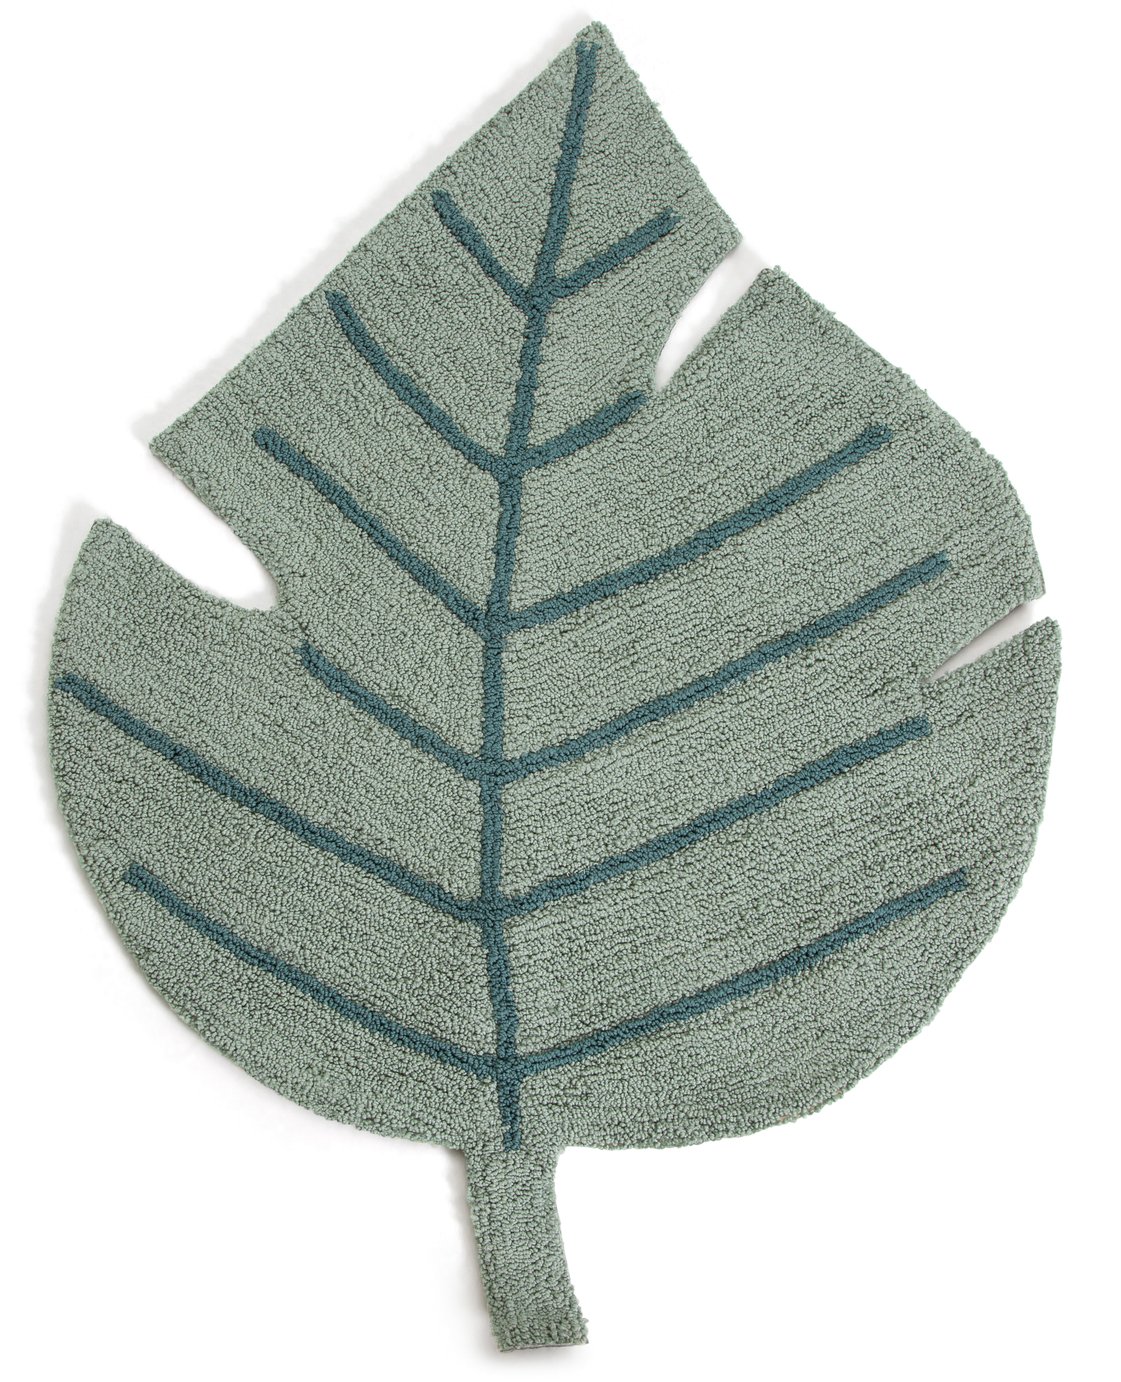 Habitat Kids Leaf Shaped Rug - Green - 80x110cm